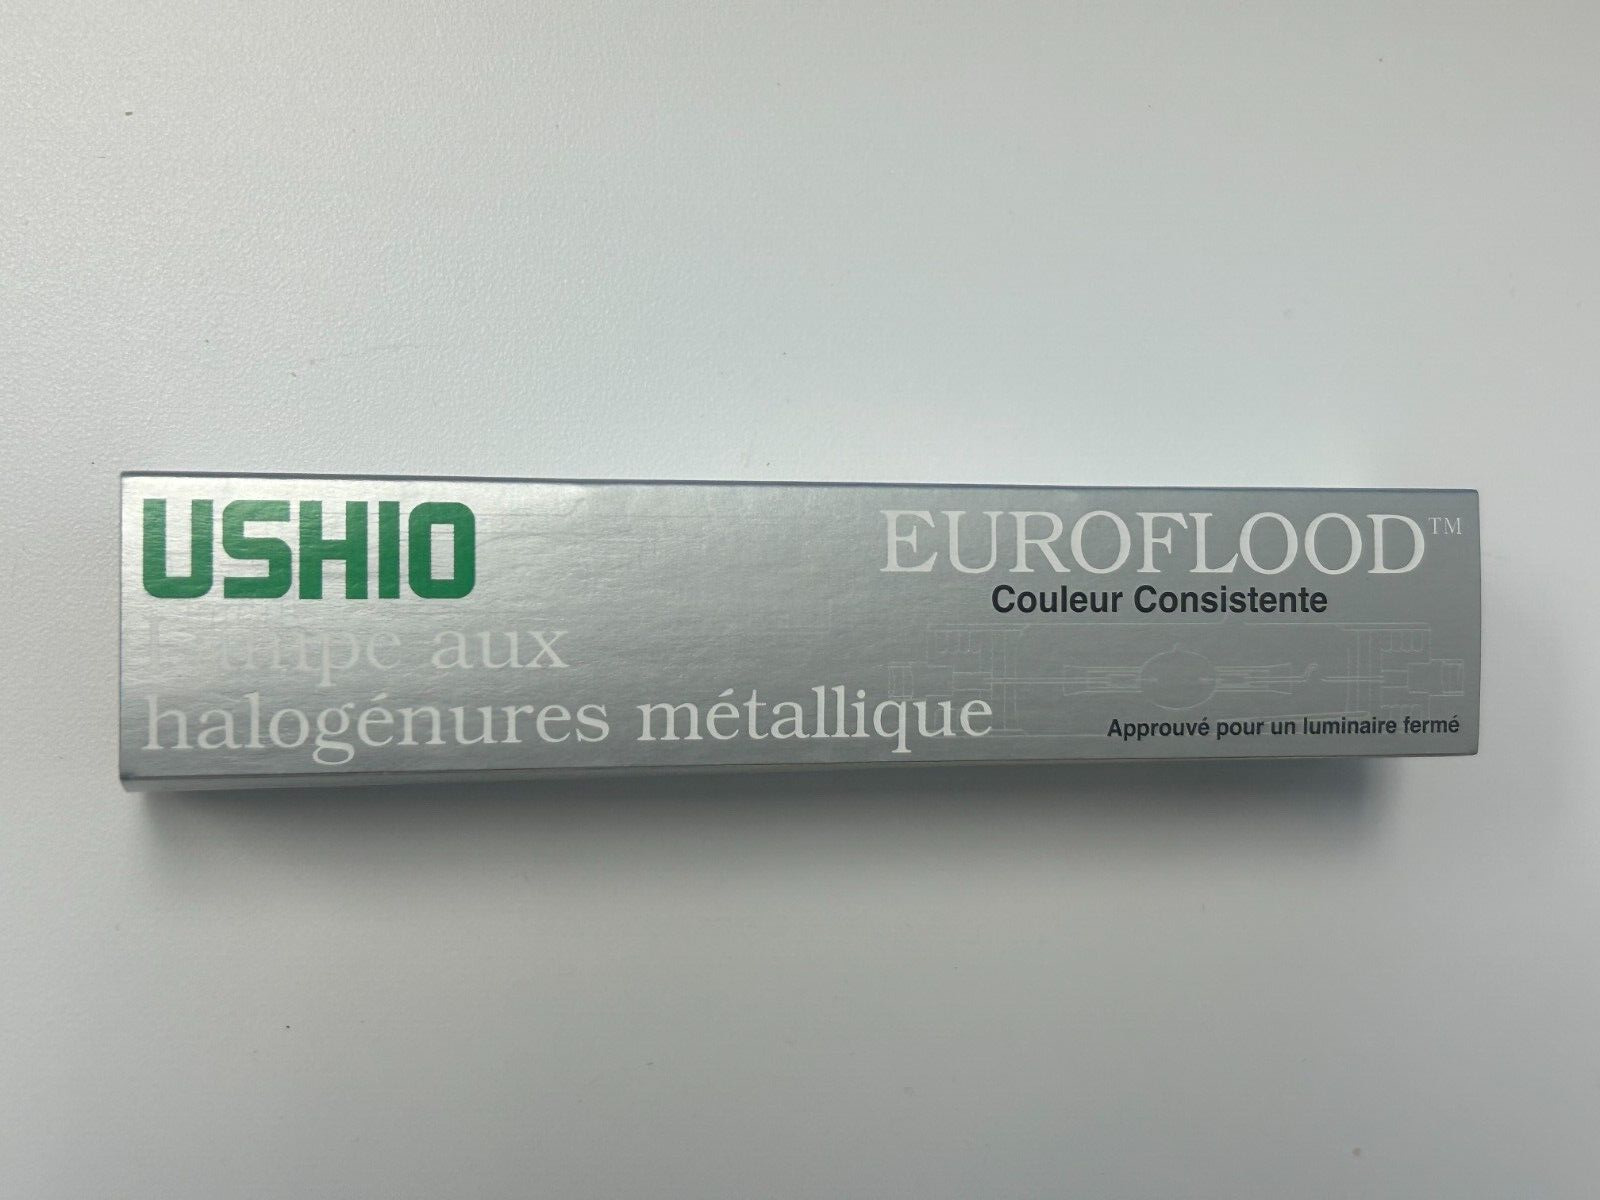 USHIO METAL HALIDE LAMP EUROFLOOD UHI-70AQ/14 14.000K 5001627 M85/E